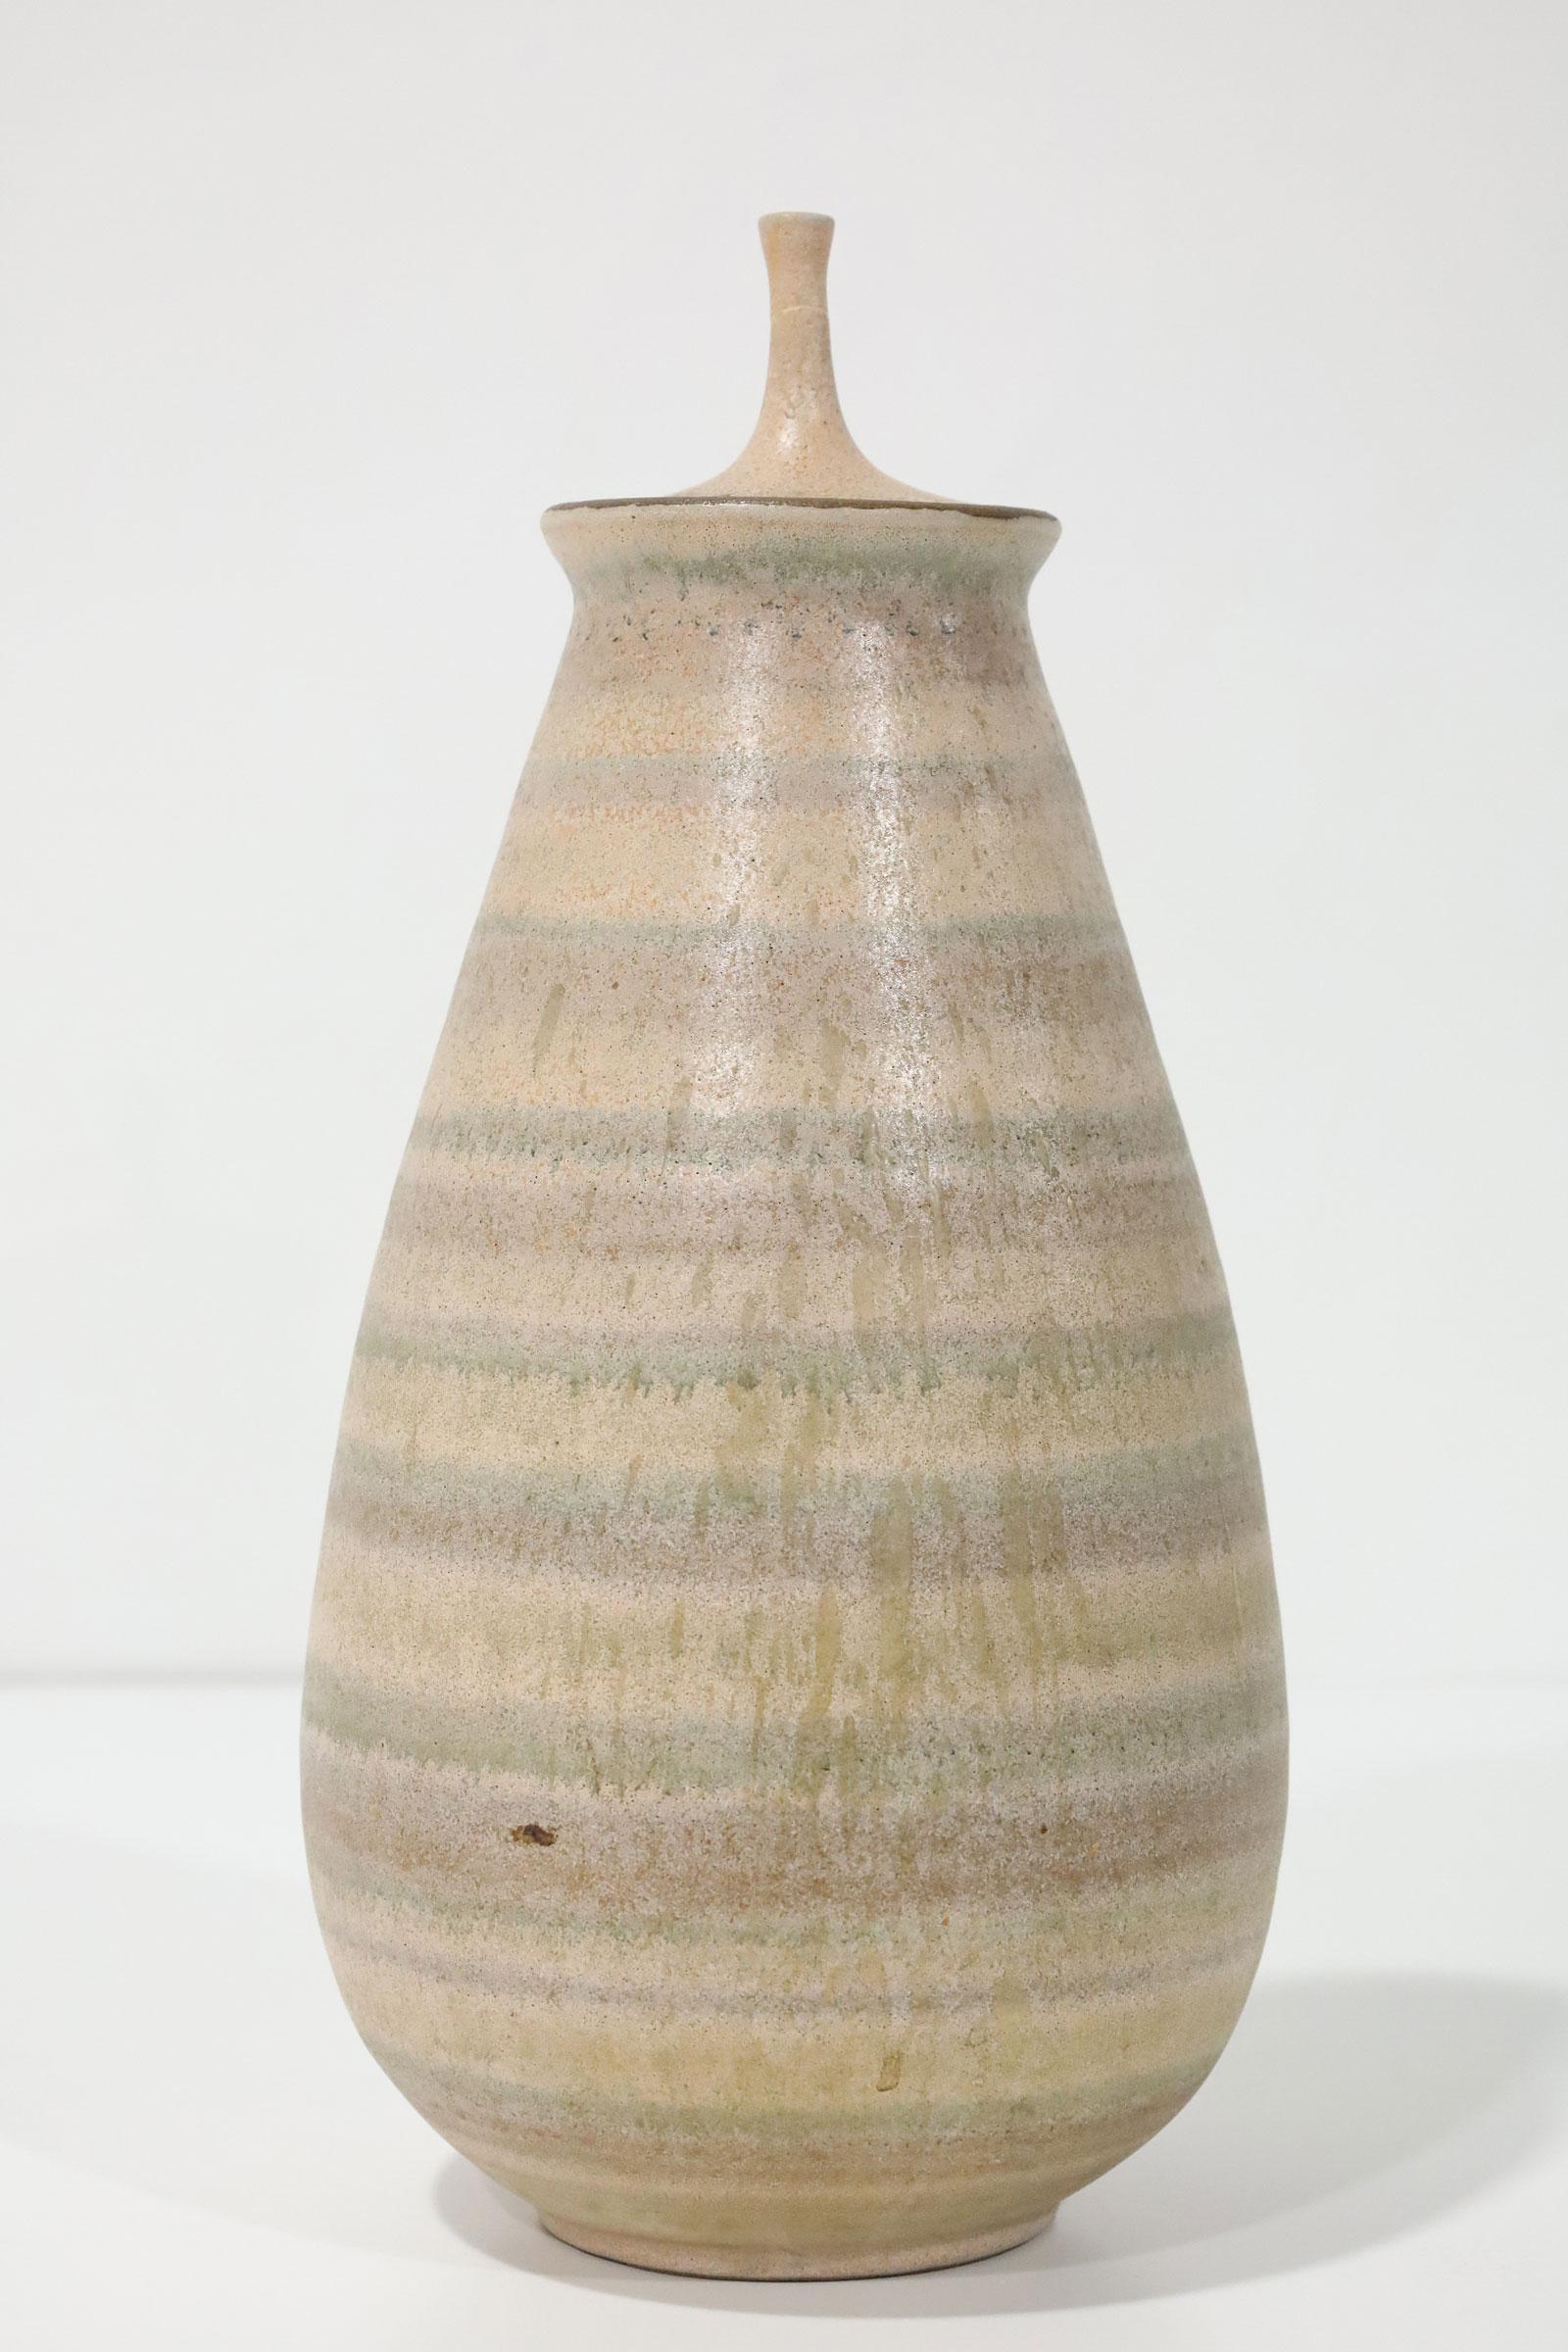 Clyde Burt Ceramic Vase with Lid For Sale 1